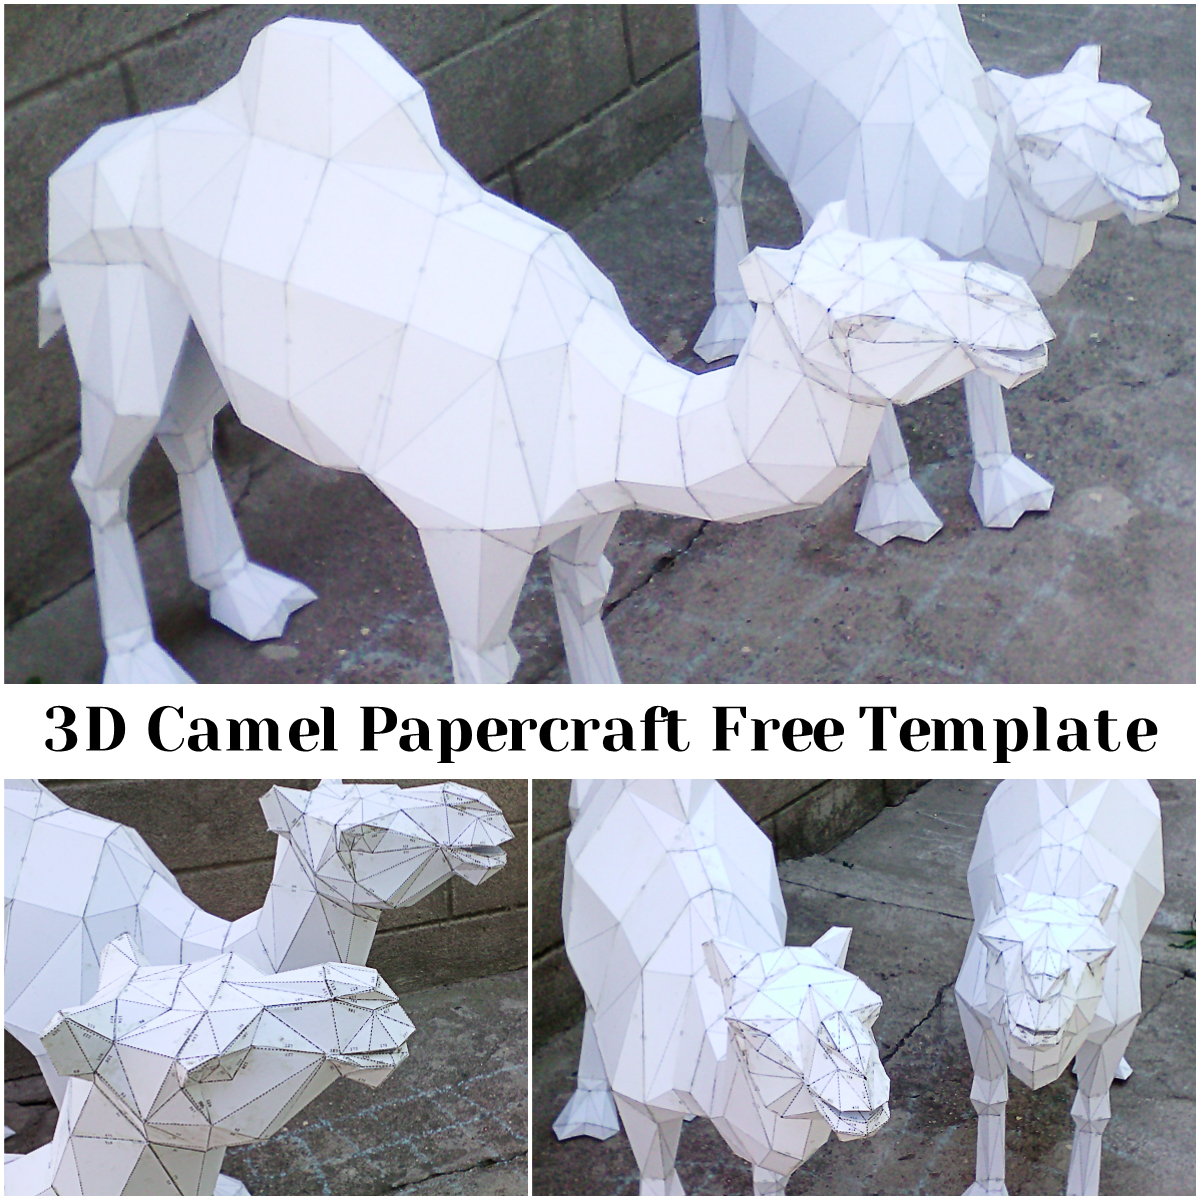 3d Camel Papercraft Free Template